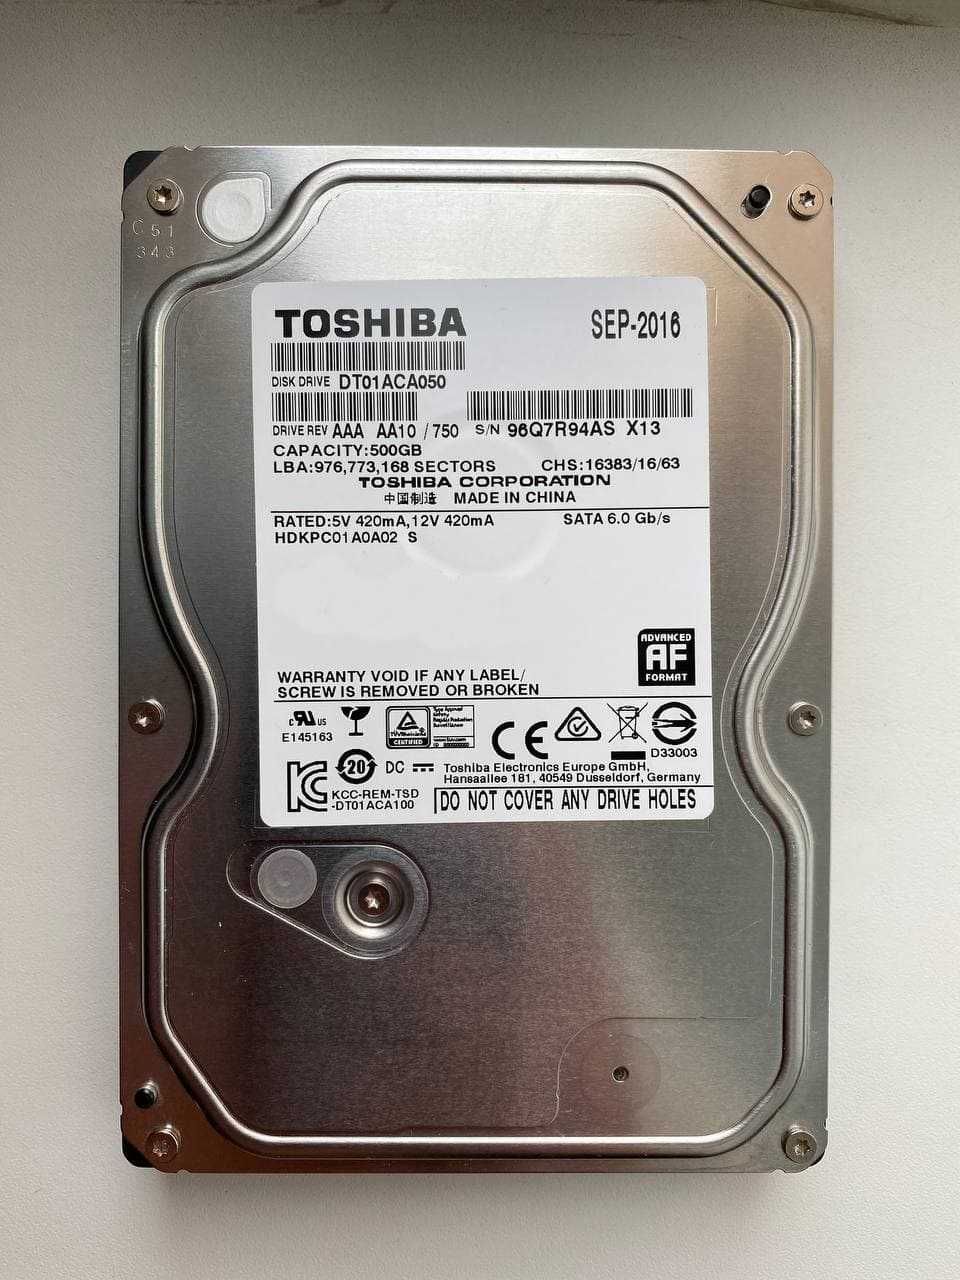 Toshiba 500GB 7200rpm 32MB DT01ACA050 3.5 SATA III